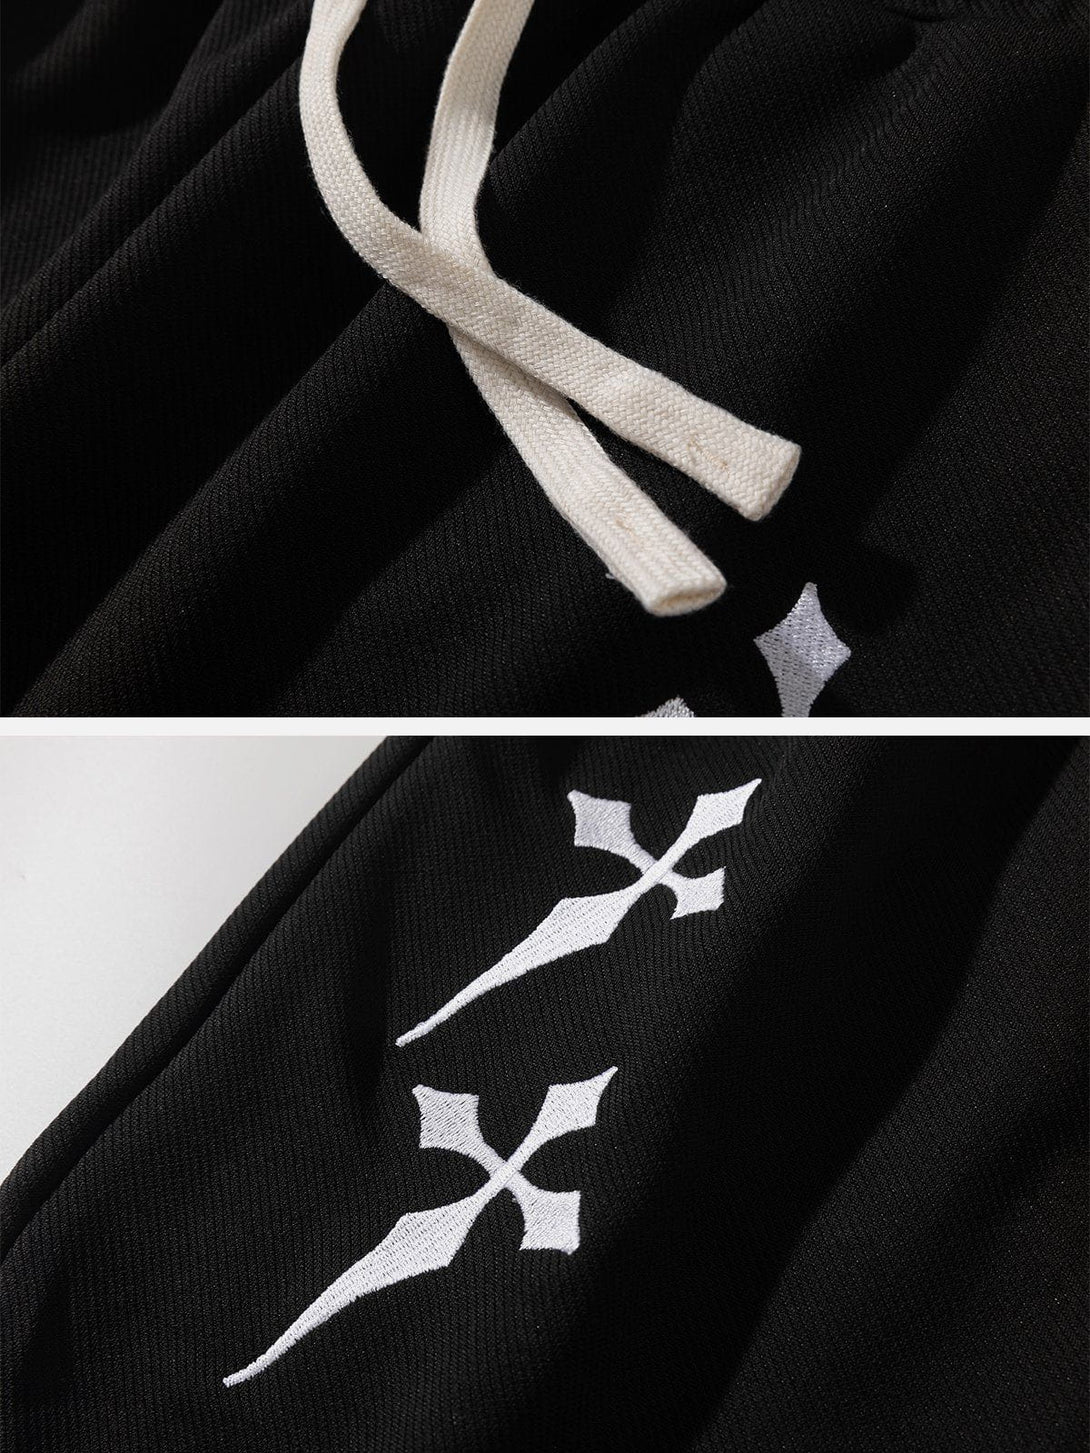 Majesda® - Towel Embroidery Sports Shorts outfit ideas streetwear fashion